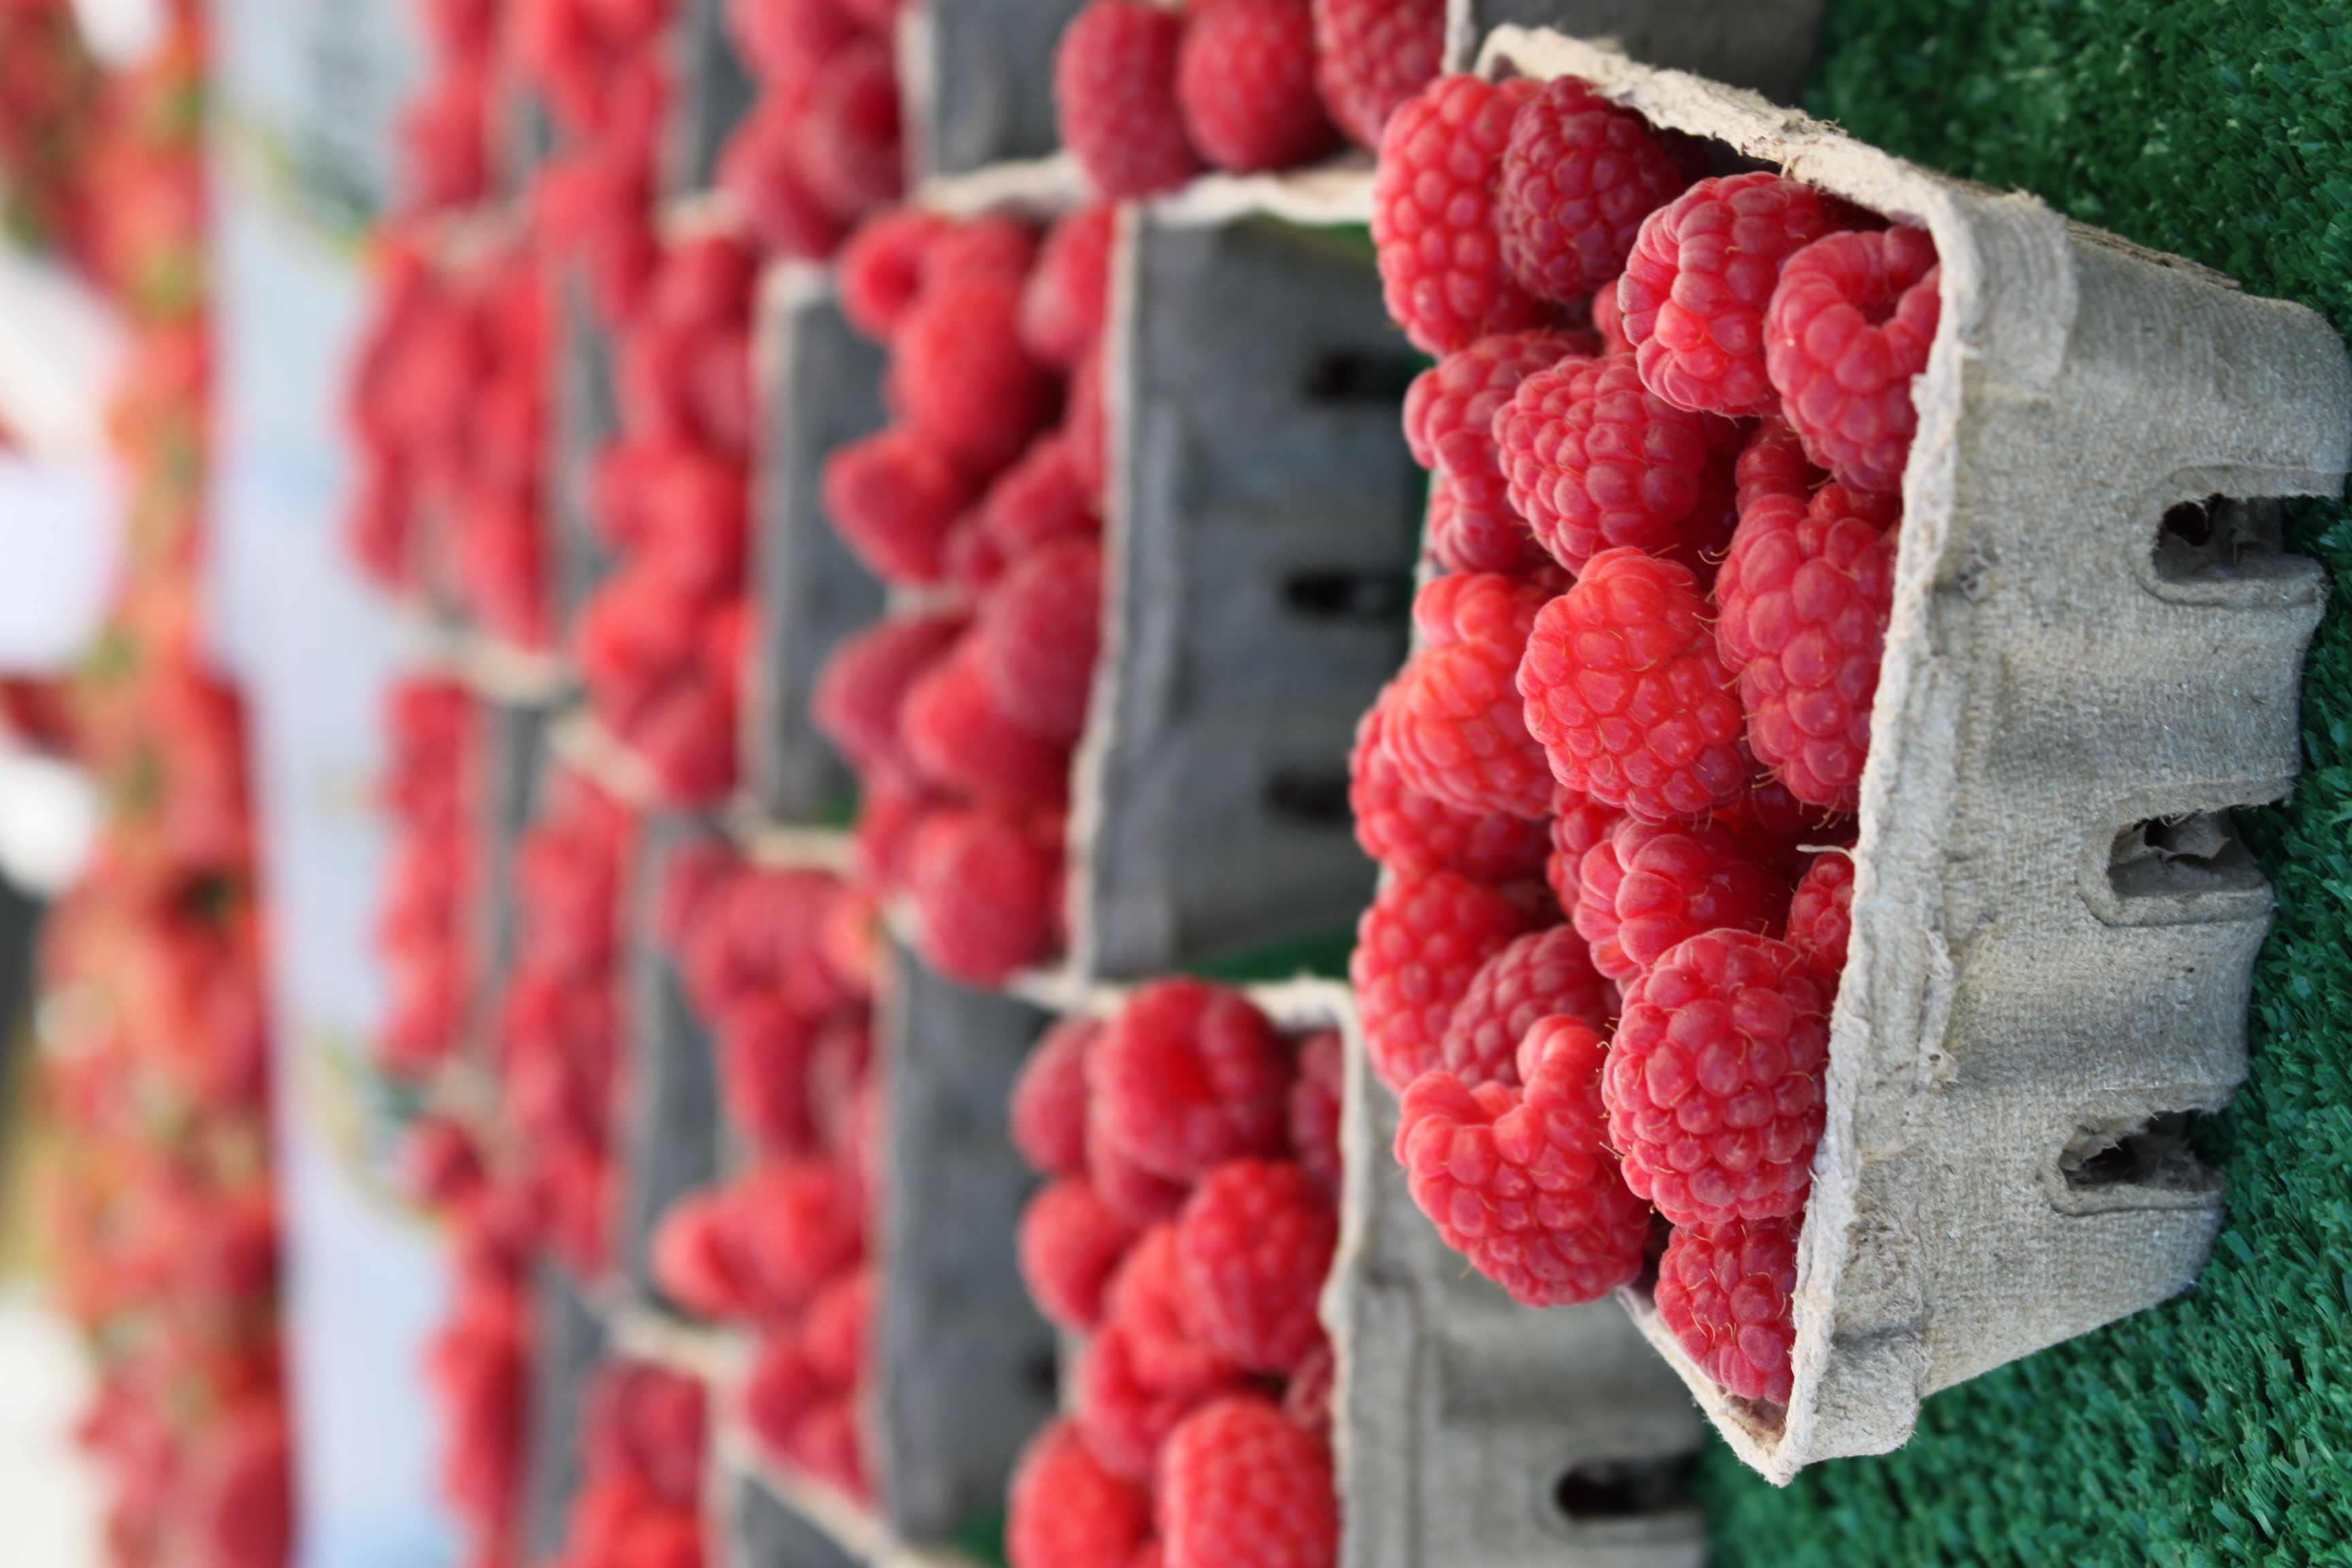 Rasberries Santa Rosa's West End Farmers Market